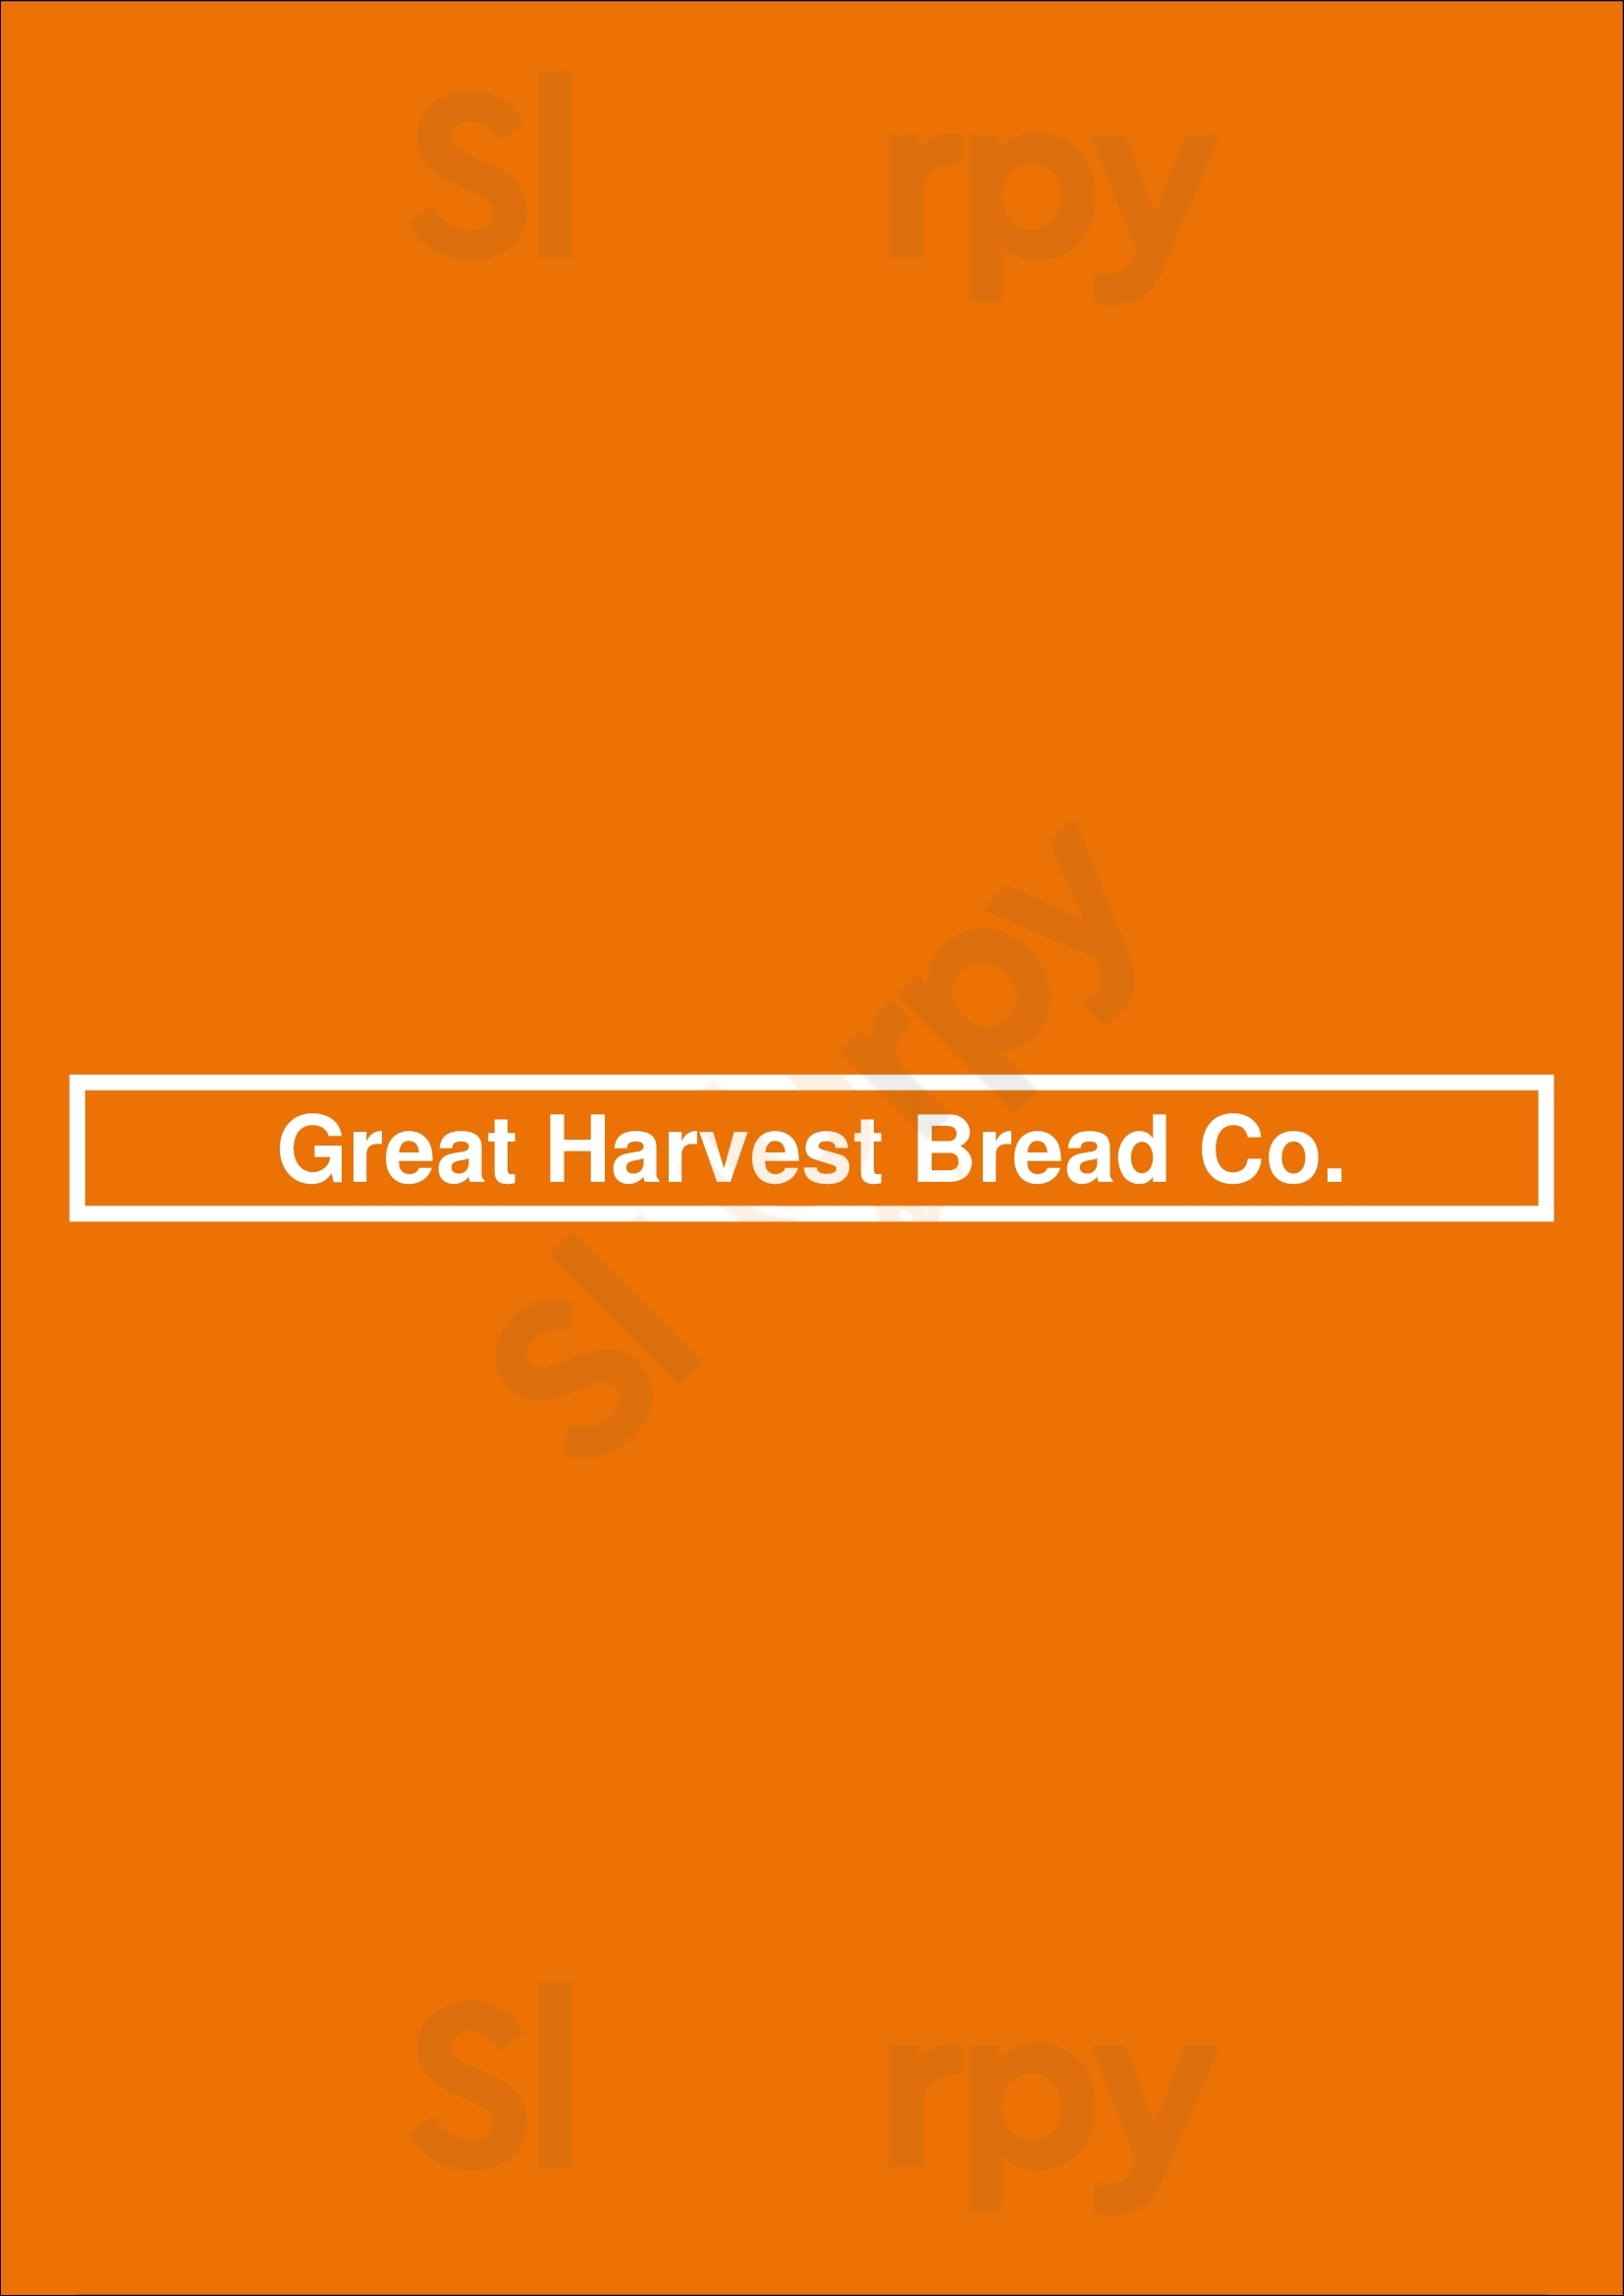 Great Harvest Bread Co. Houston Menu - 1